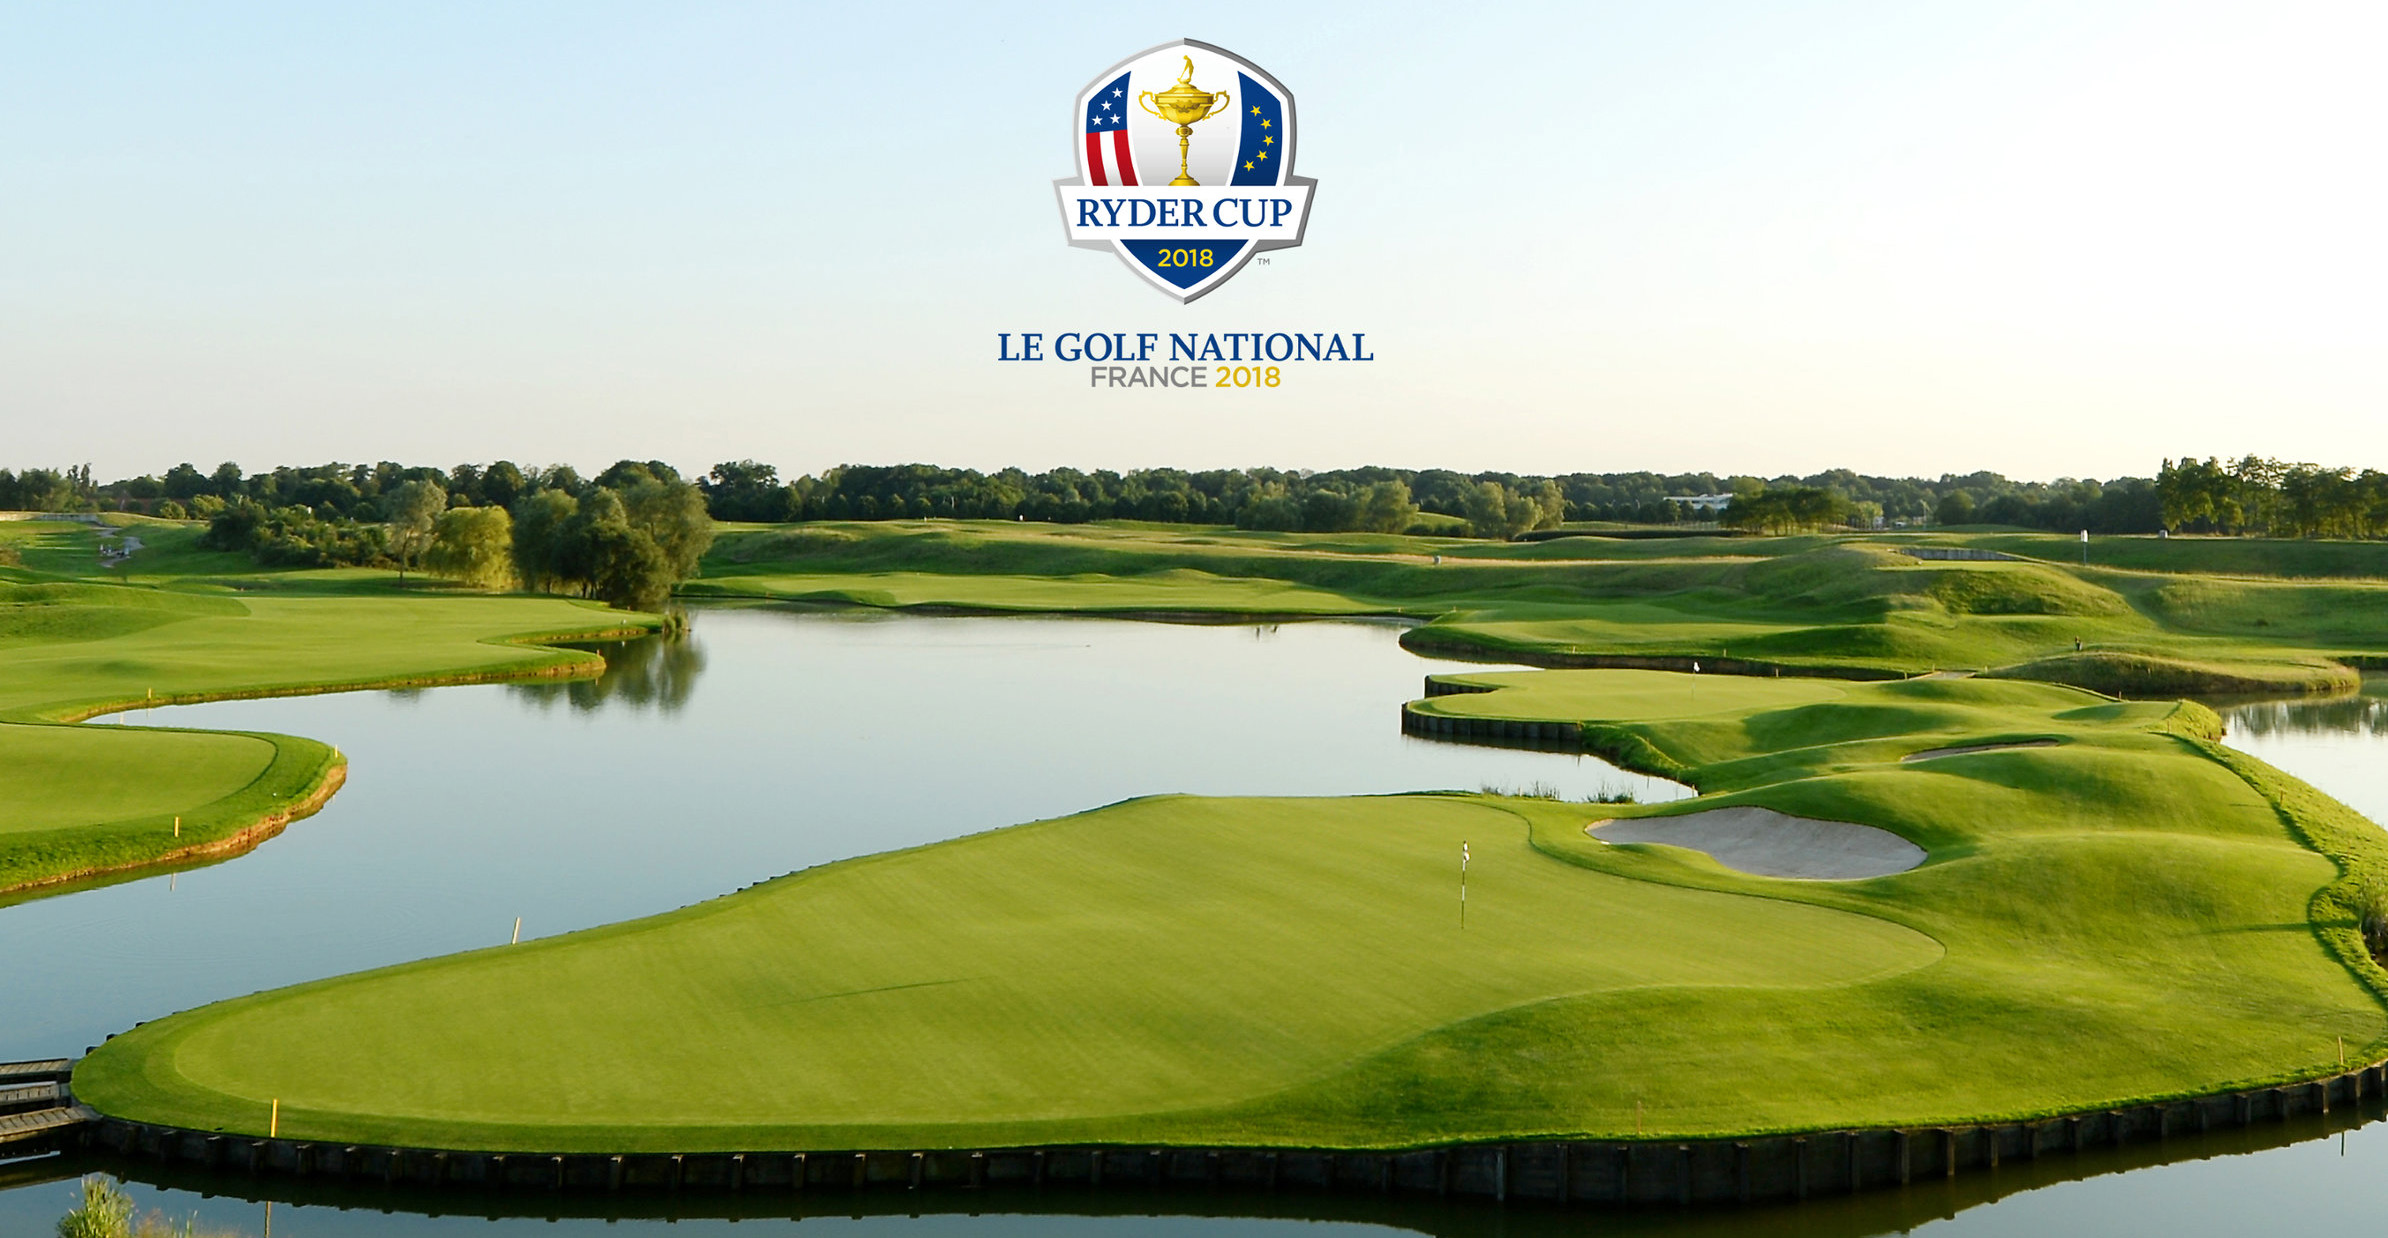 Tổng quan 18 hố golf tại sân Le Golf National - Kỳ 2